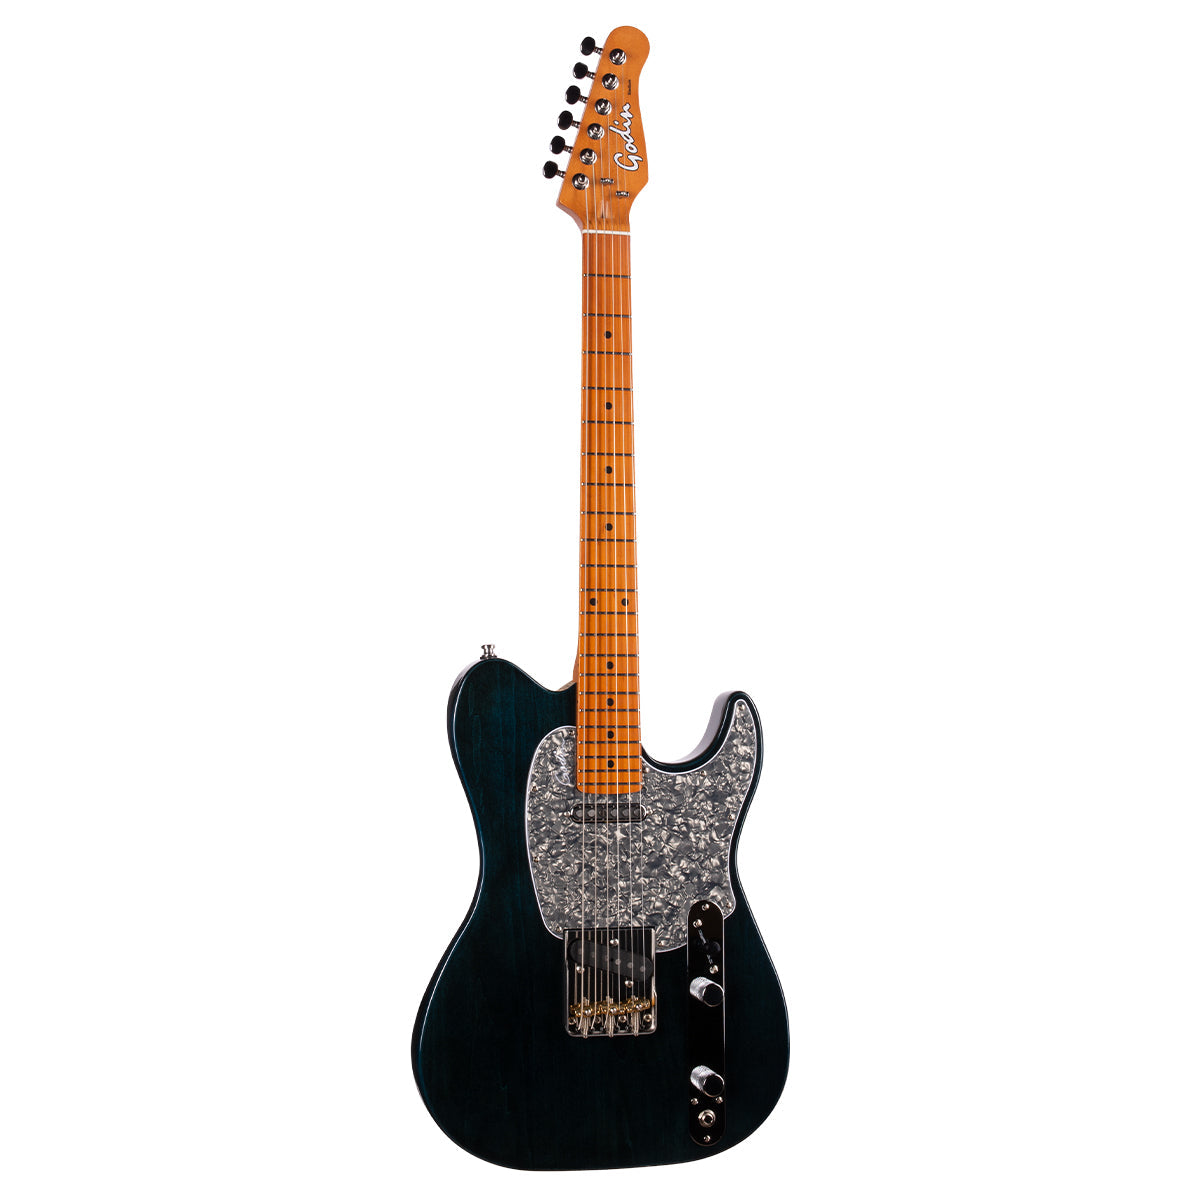 Godin Stadium Pro Electric Guitar ~ Pacifik Blue MN, Electric Guitar for sale at Richards Guitars.